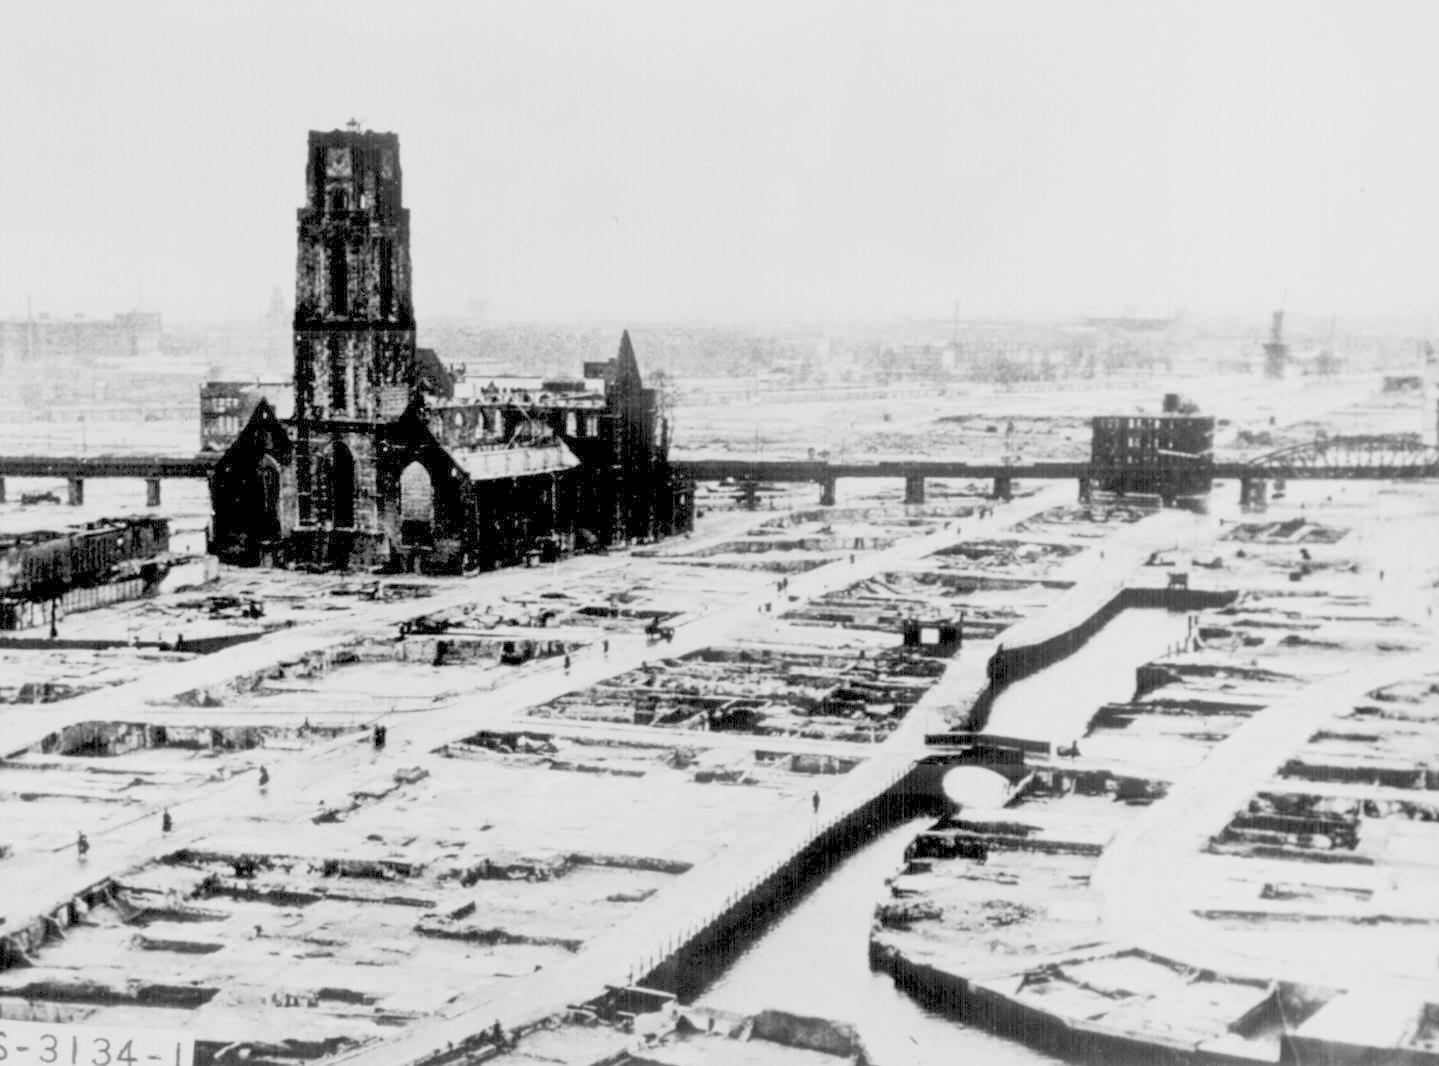 http://spiritualpilgrim.net/pictures/20_World-War-Two/NA_1945_Rotterdam-in-ruins.jpg